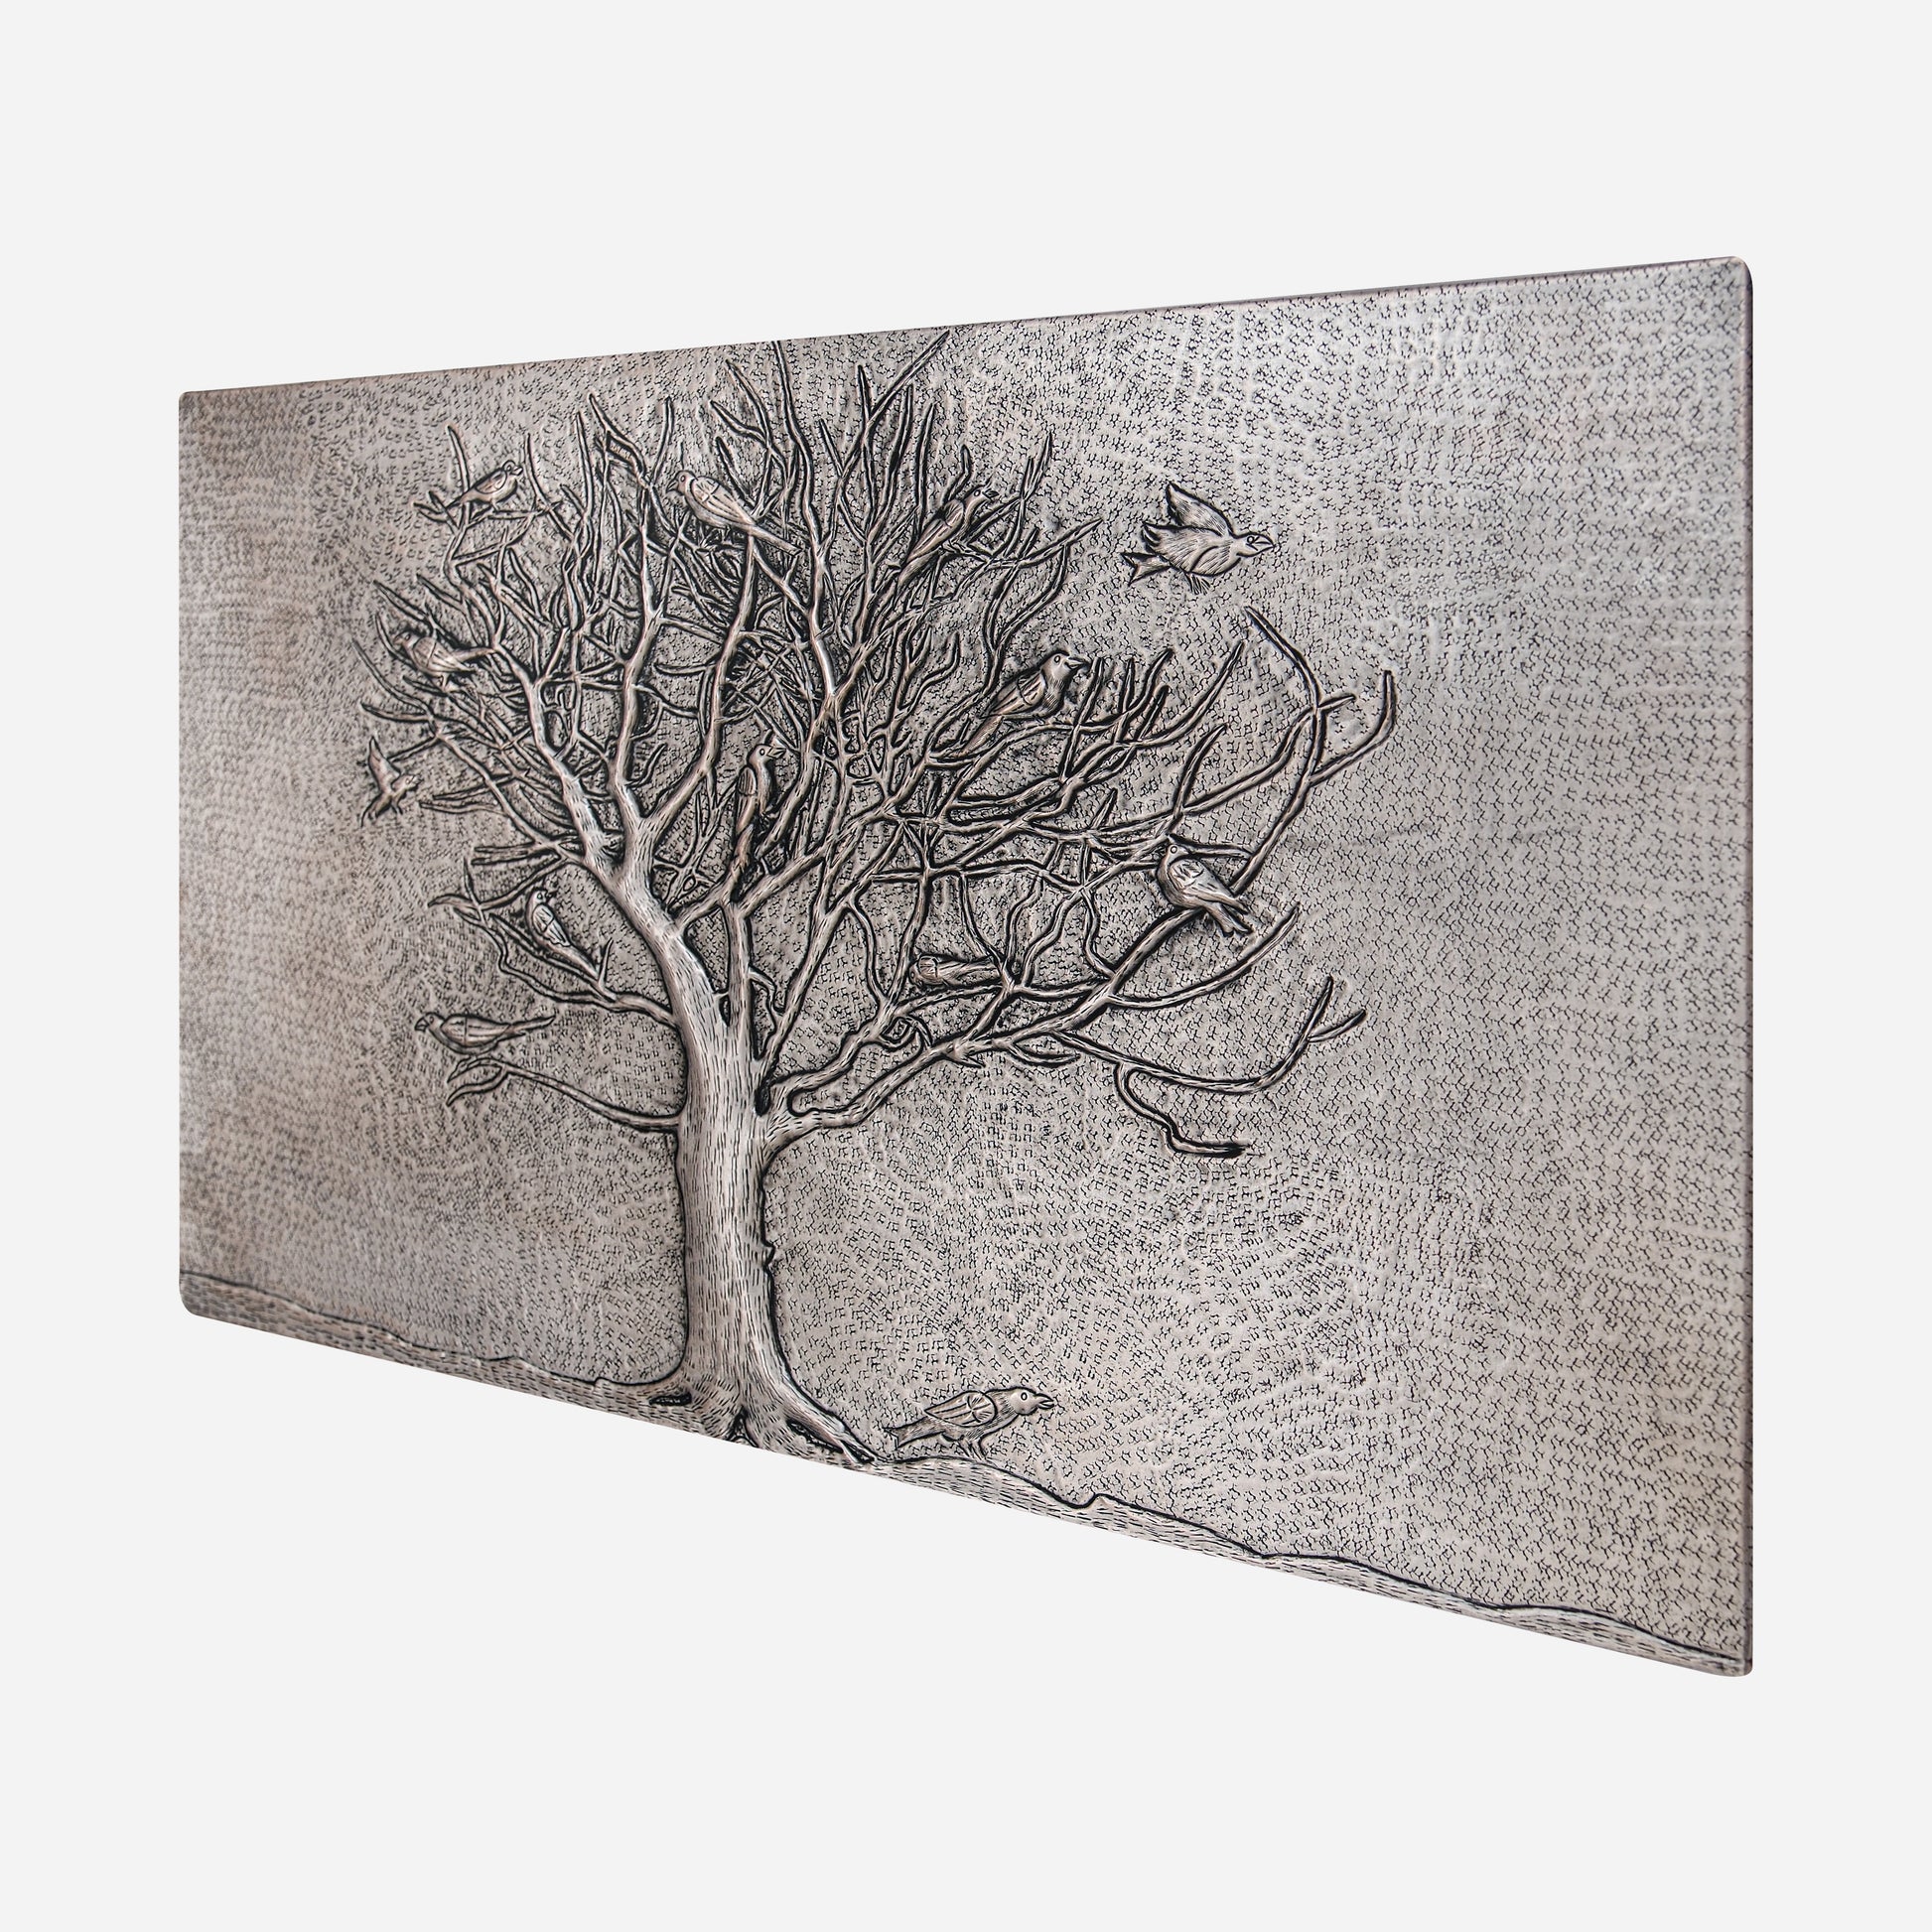 Copper Backsplash Panel (Birds on a Dead Tree, Silver Color)